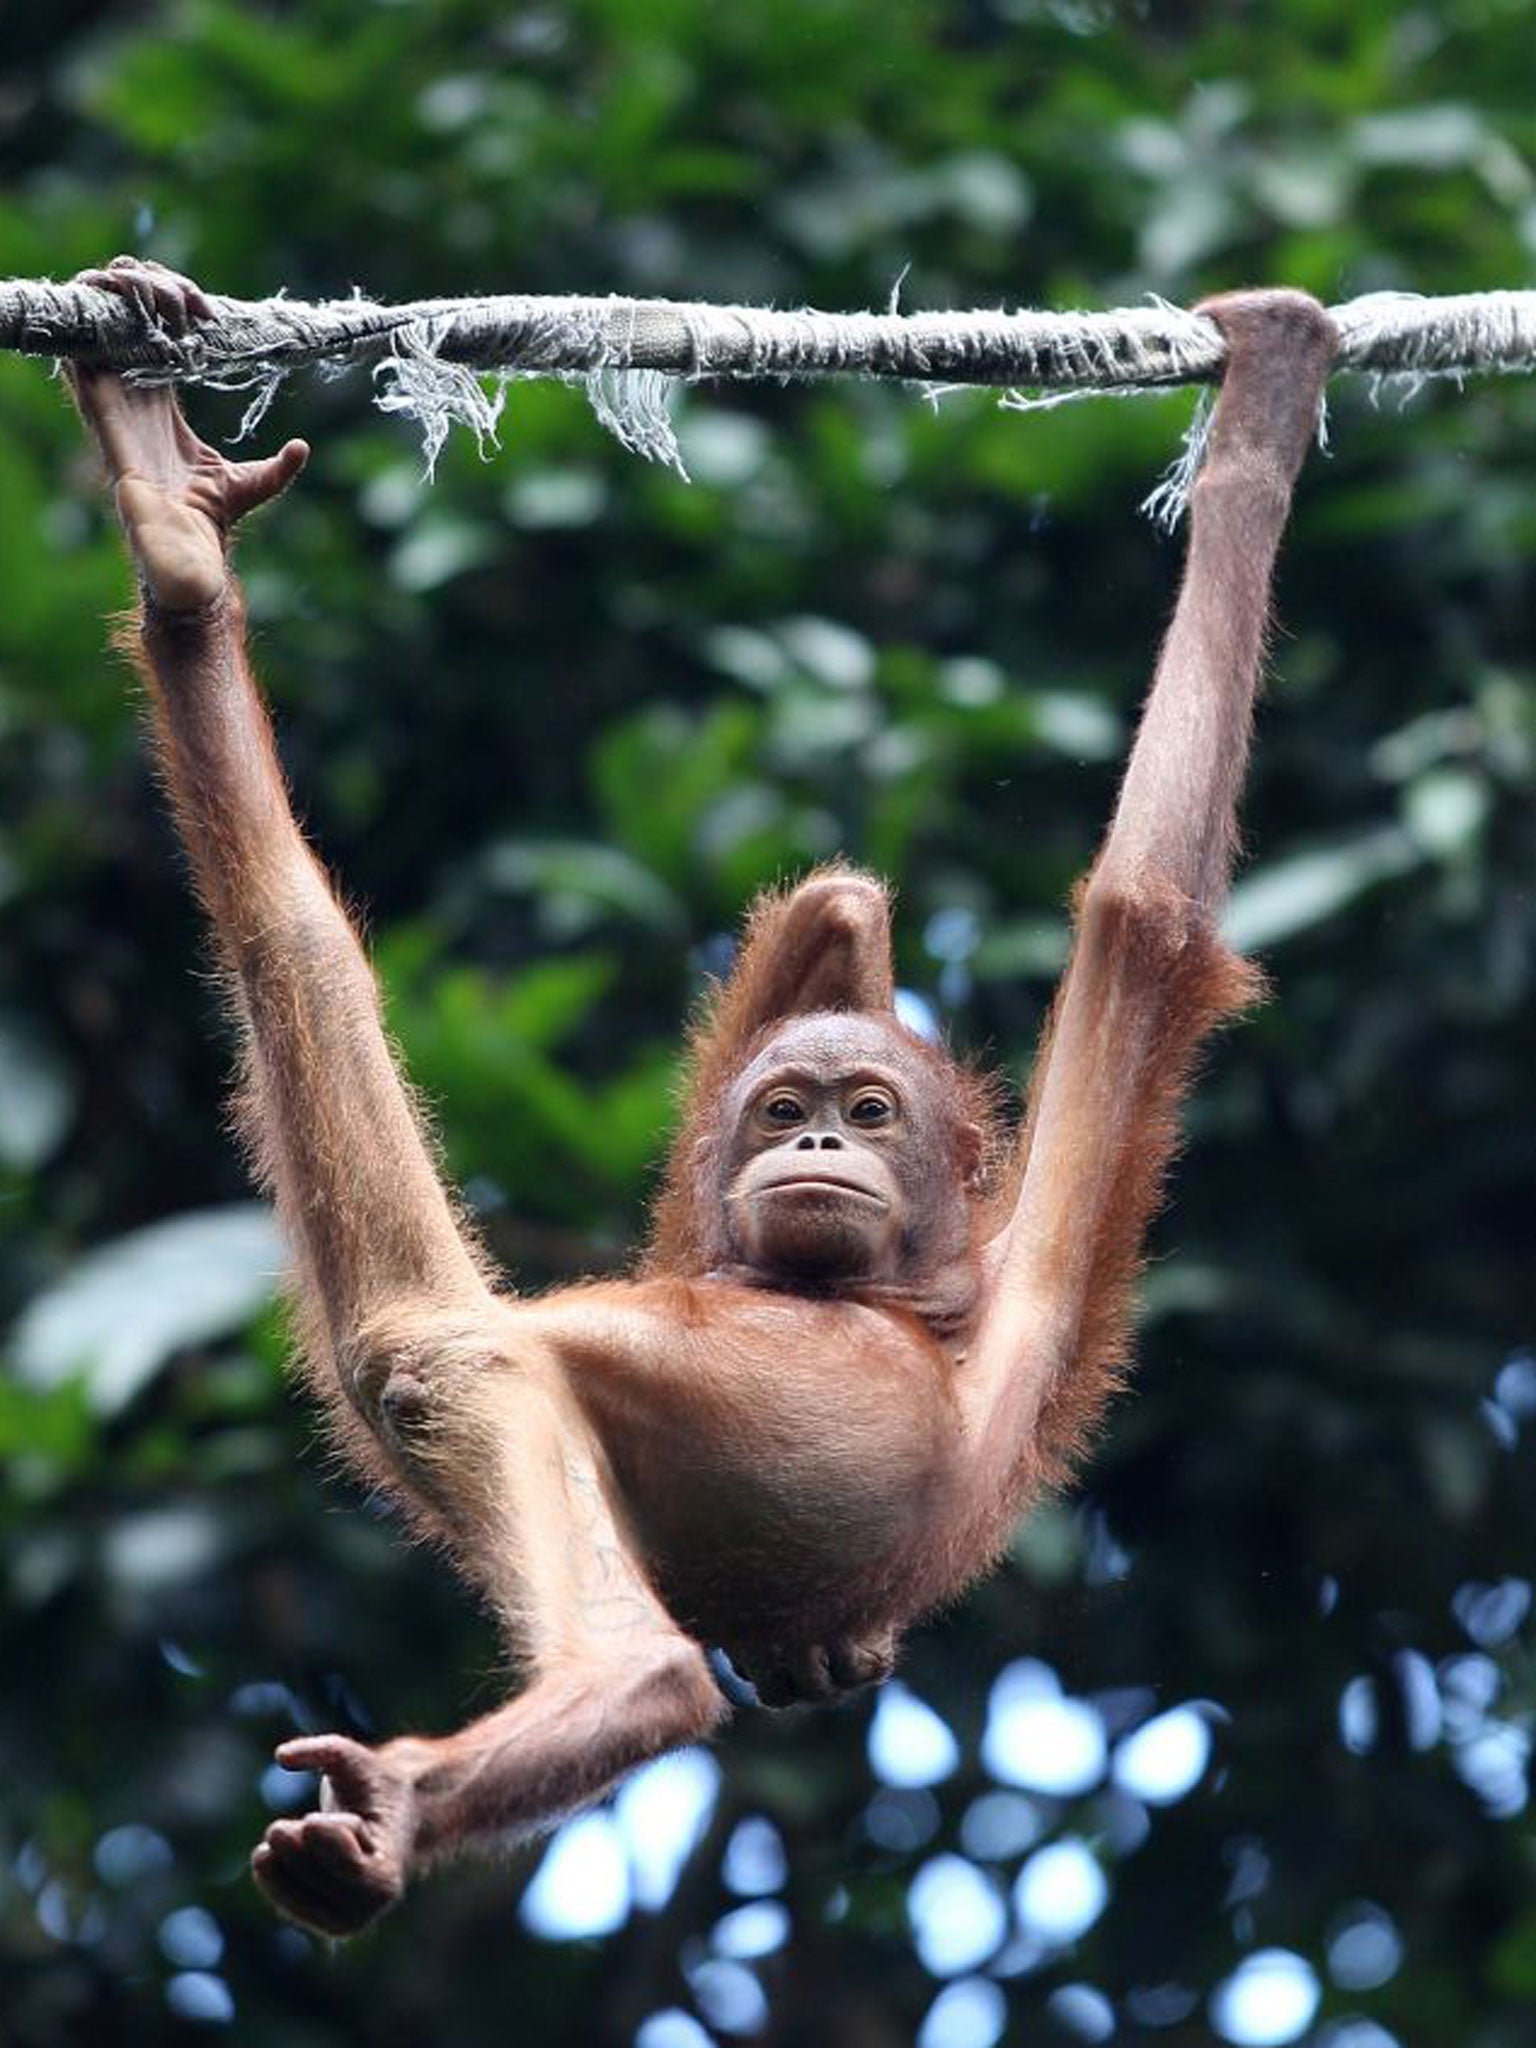 Enjoy animal encounters on a trip to Borneo